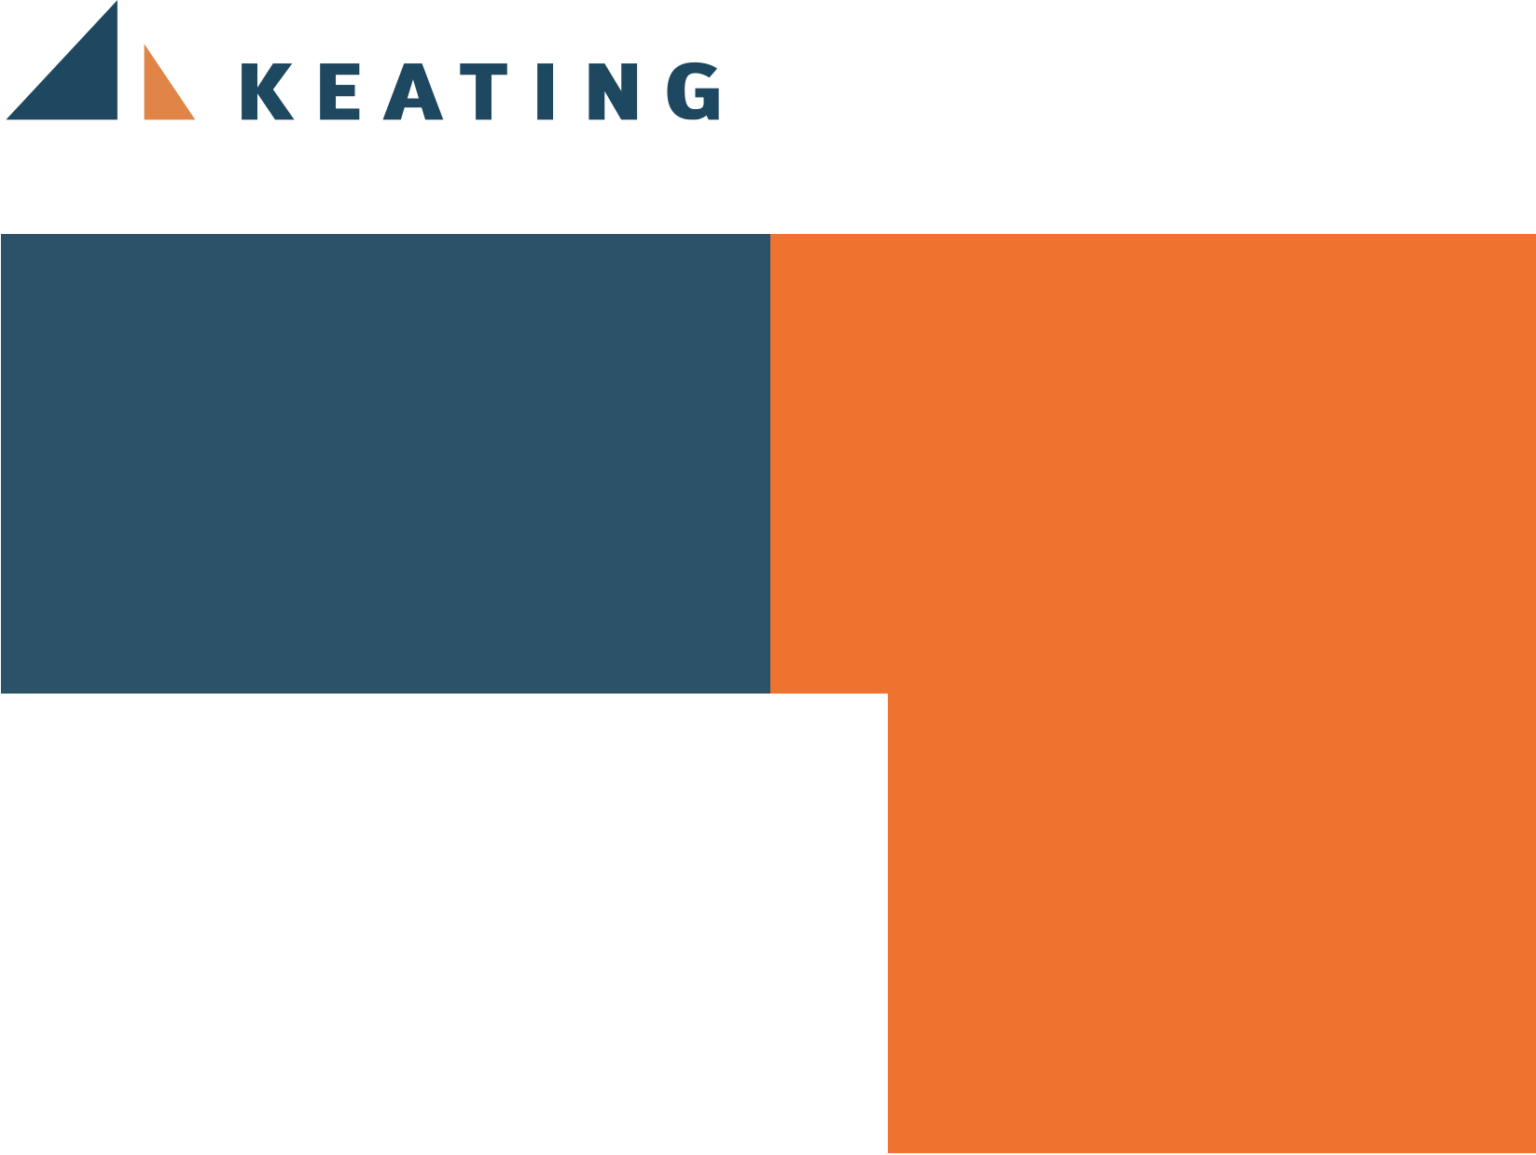 Keating Thunder Bay logo and colour palette